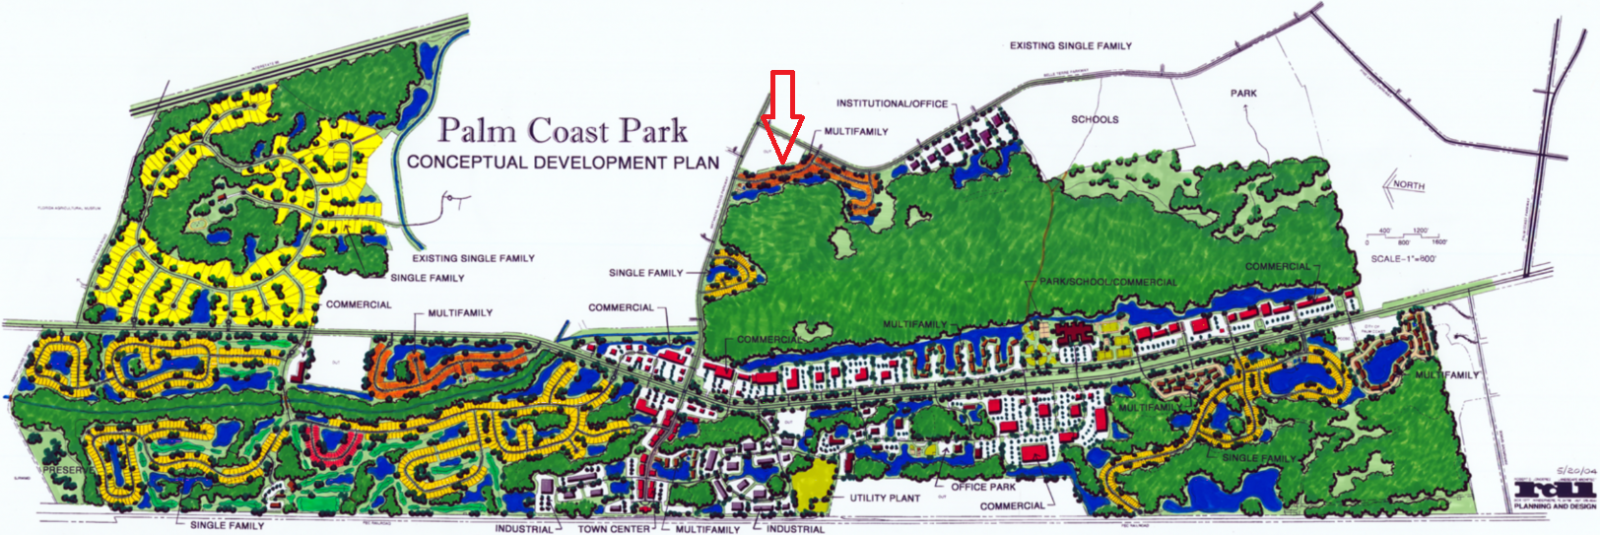 Palm Coast Park Development Plan